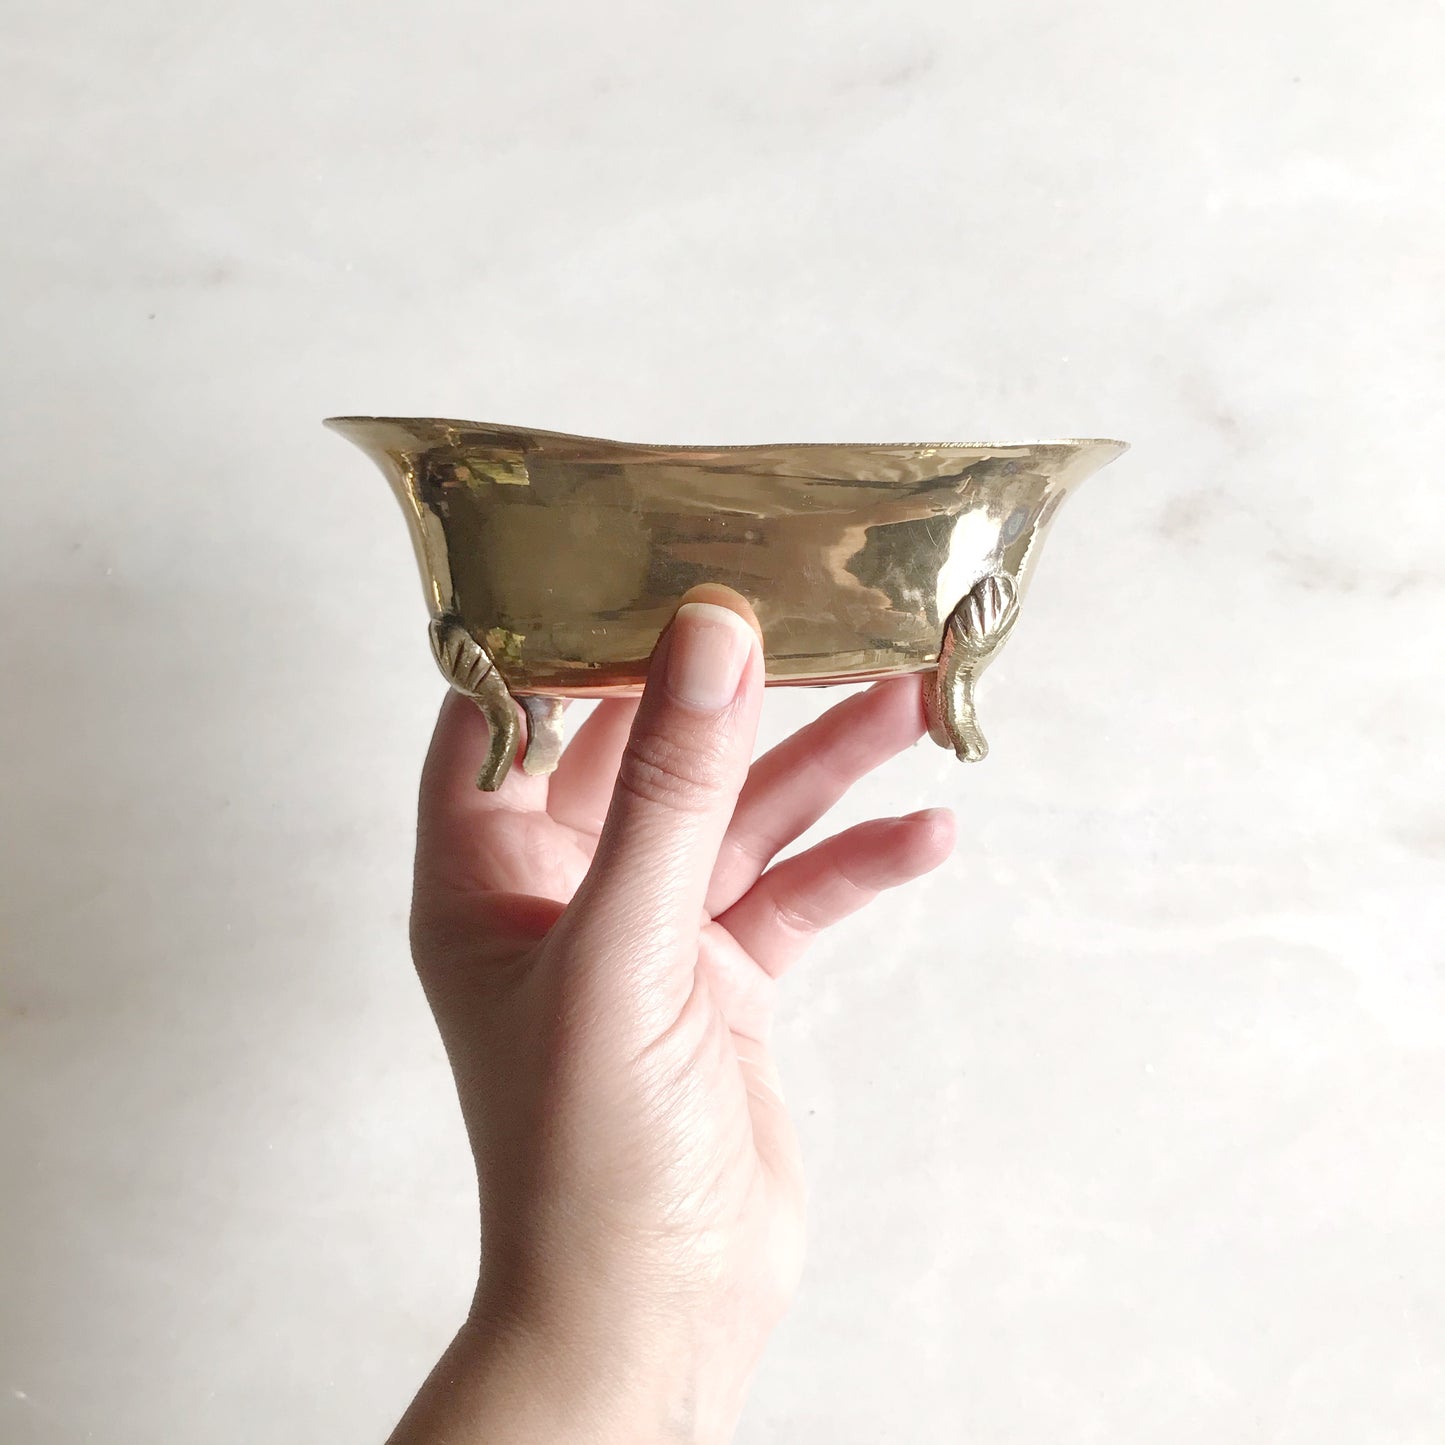 Vintage Brass Clawfoot Bathtub Soap Dish (choose size)